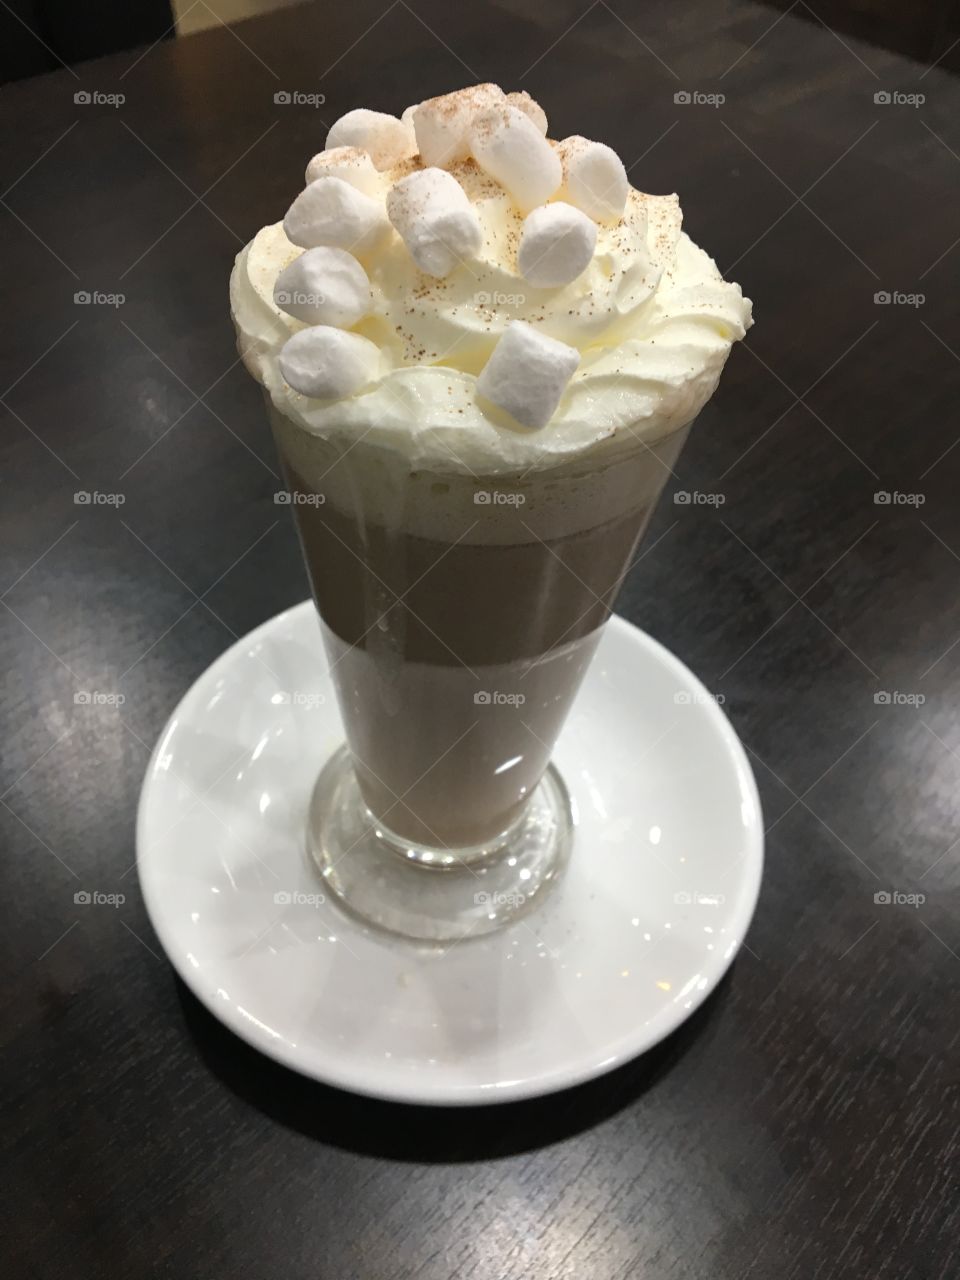 Hot chocolate. Cream. Marshmallows.